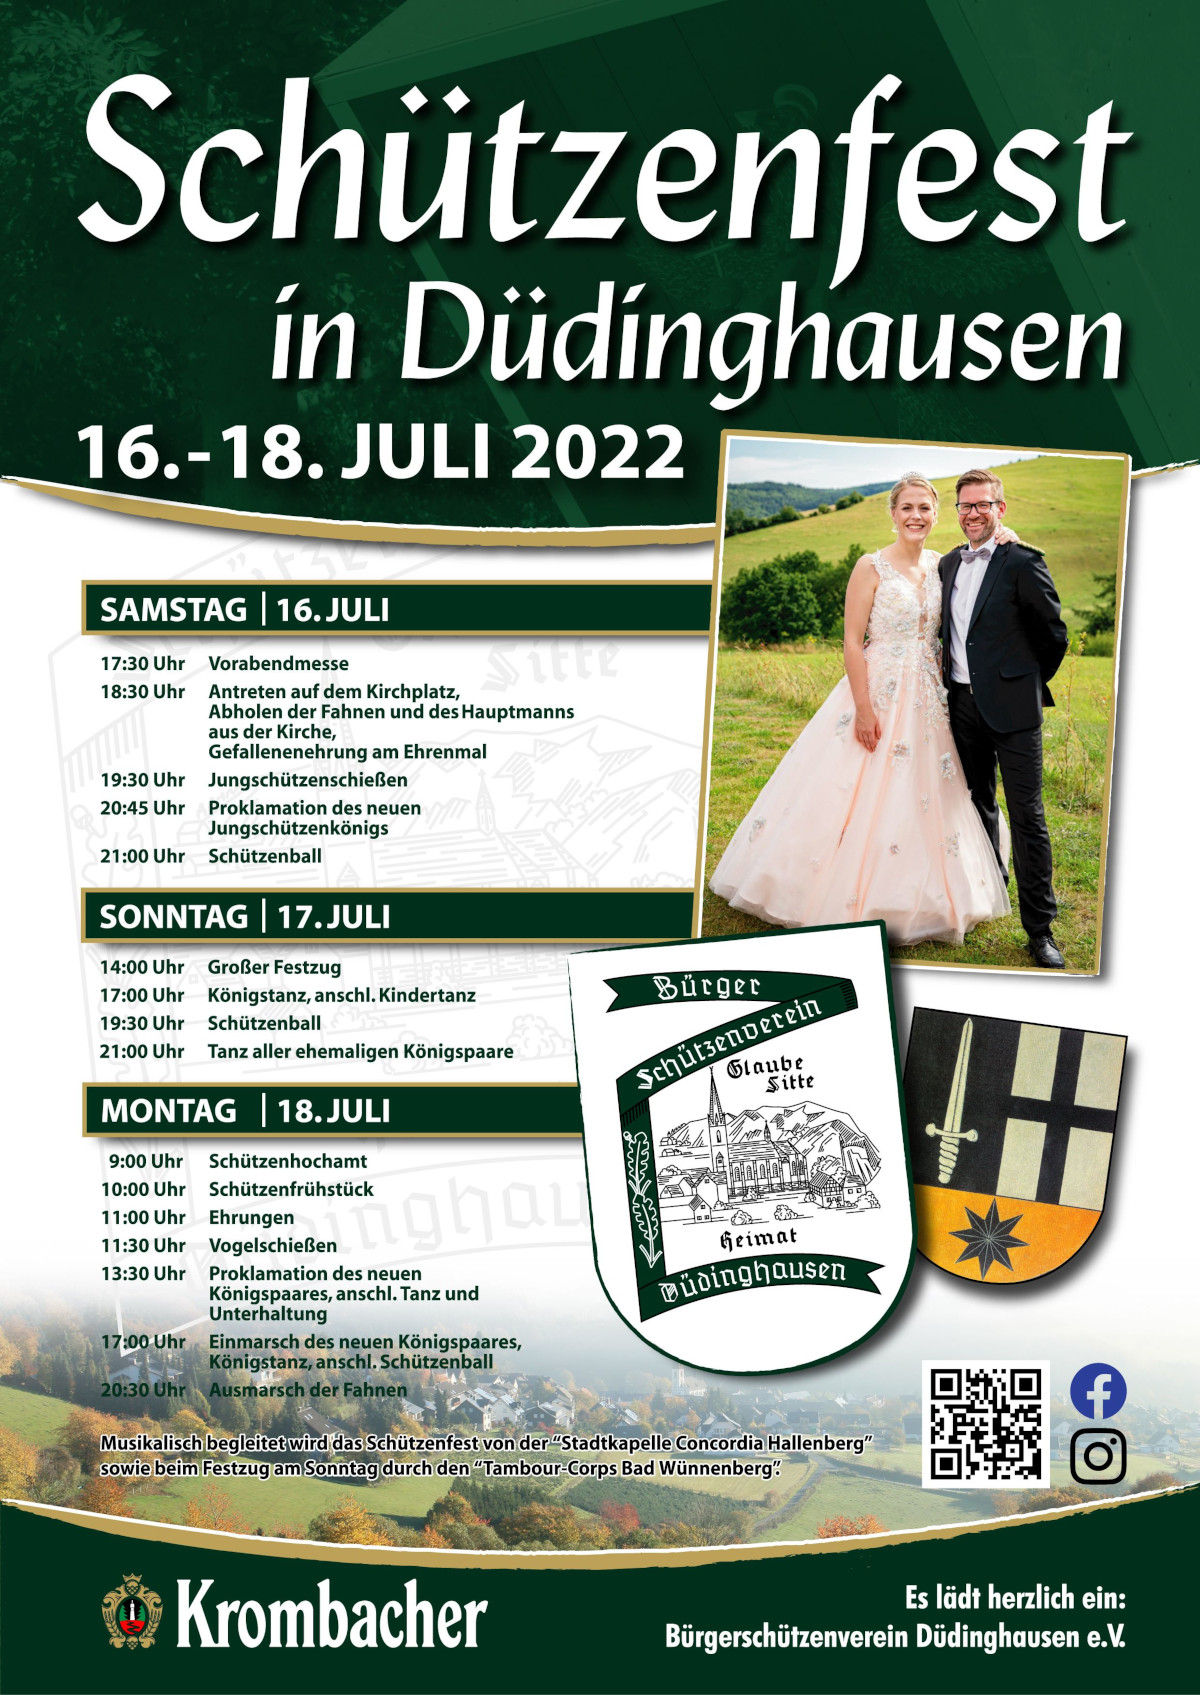 Schützenfest in Düdinghausen